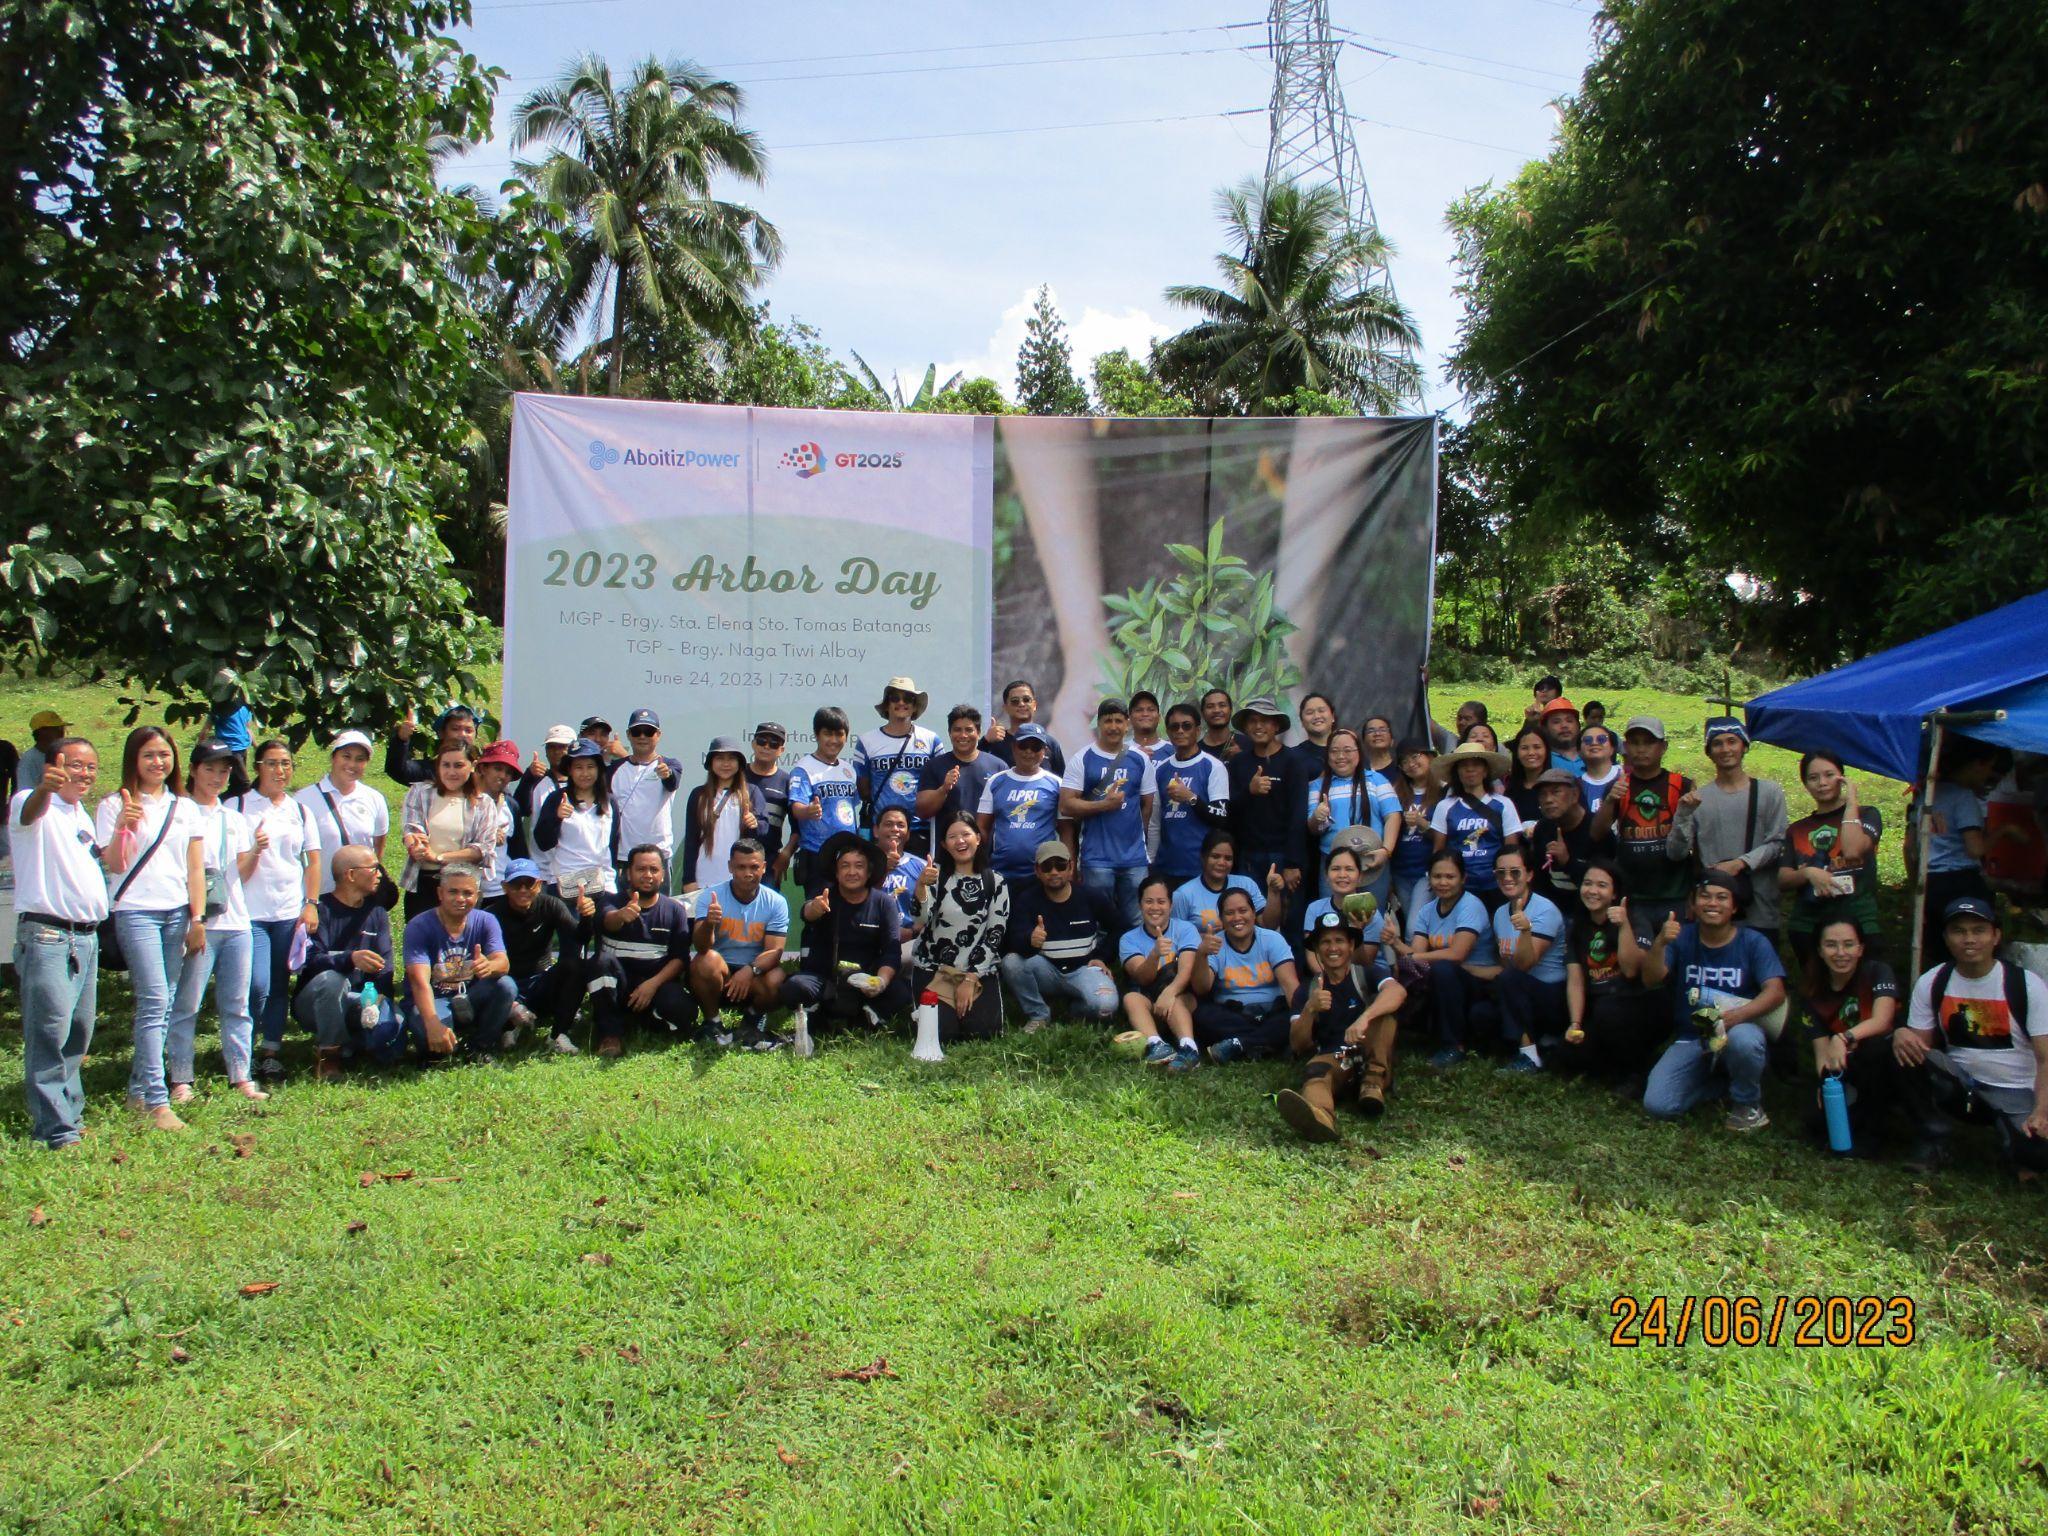 APRI plants more than 3,000 tree seedlings in Albay and Batangas